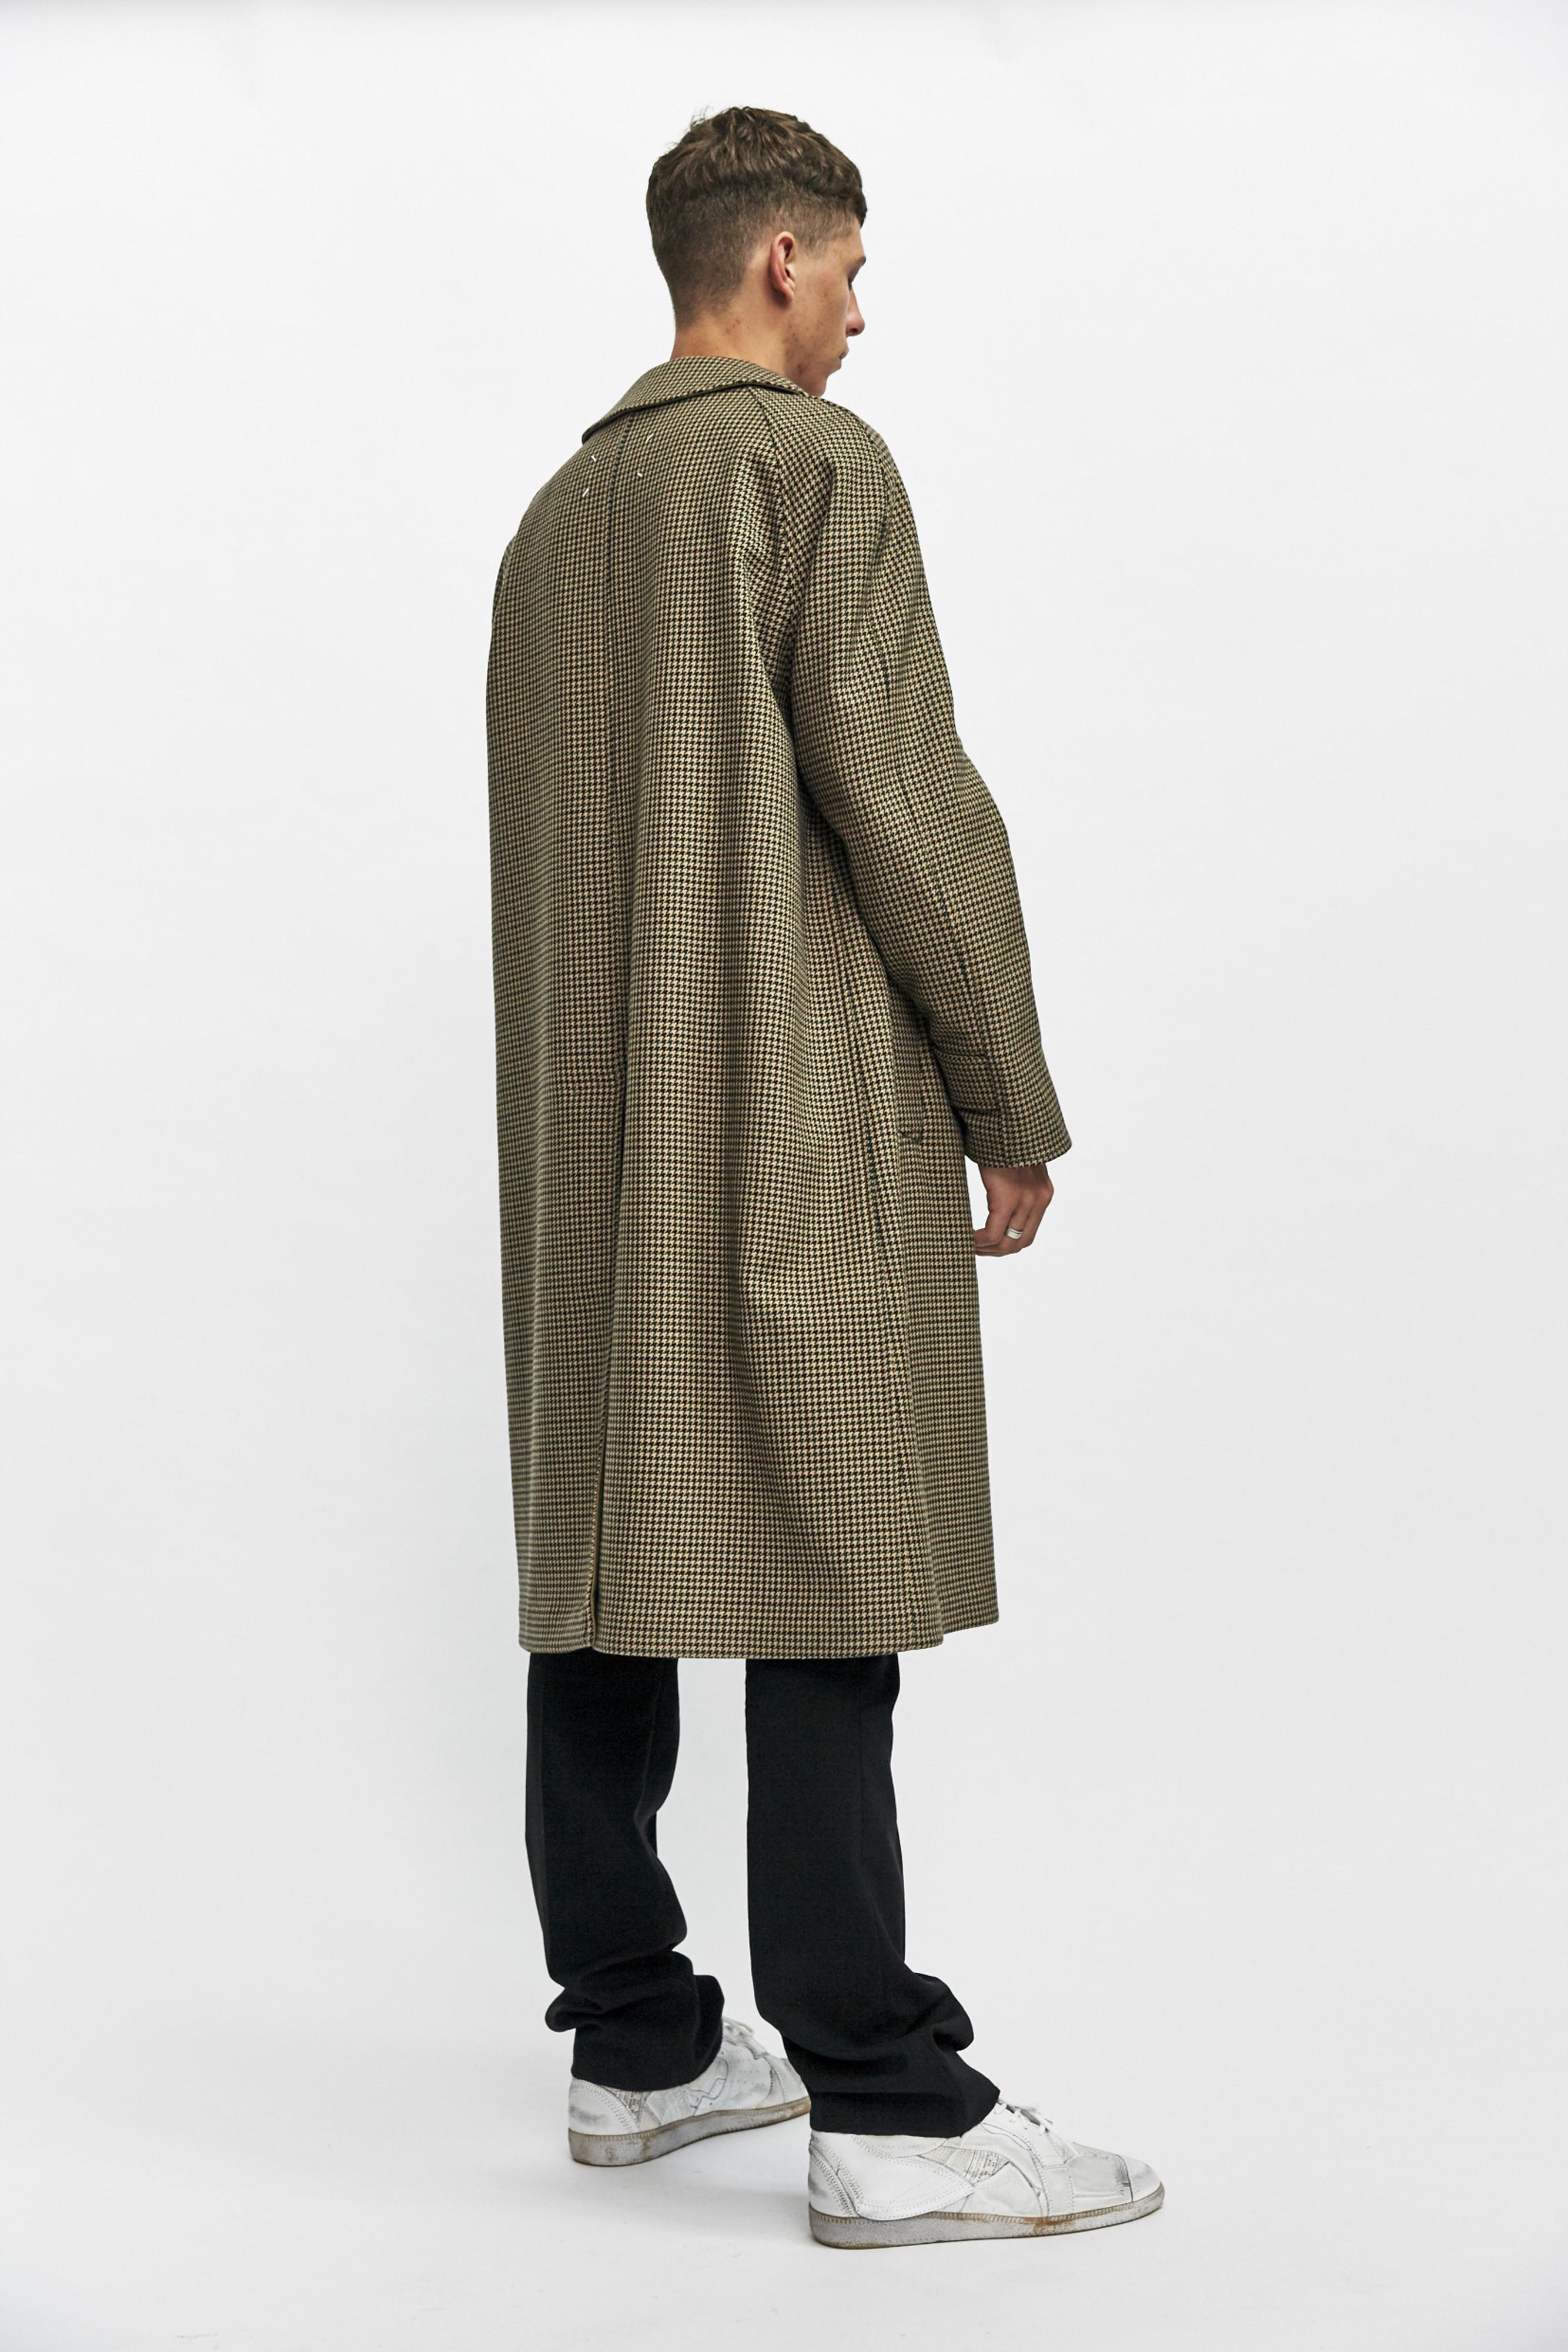 Maison Margiela Wool Reversible Houndstooth Check Coat for Men - Lyst